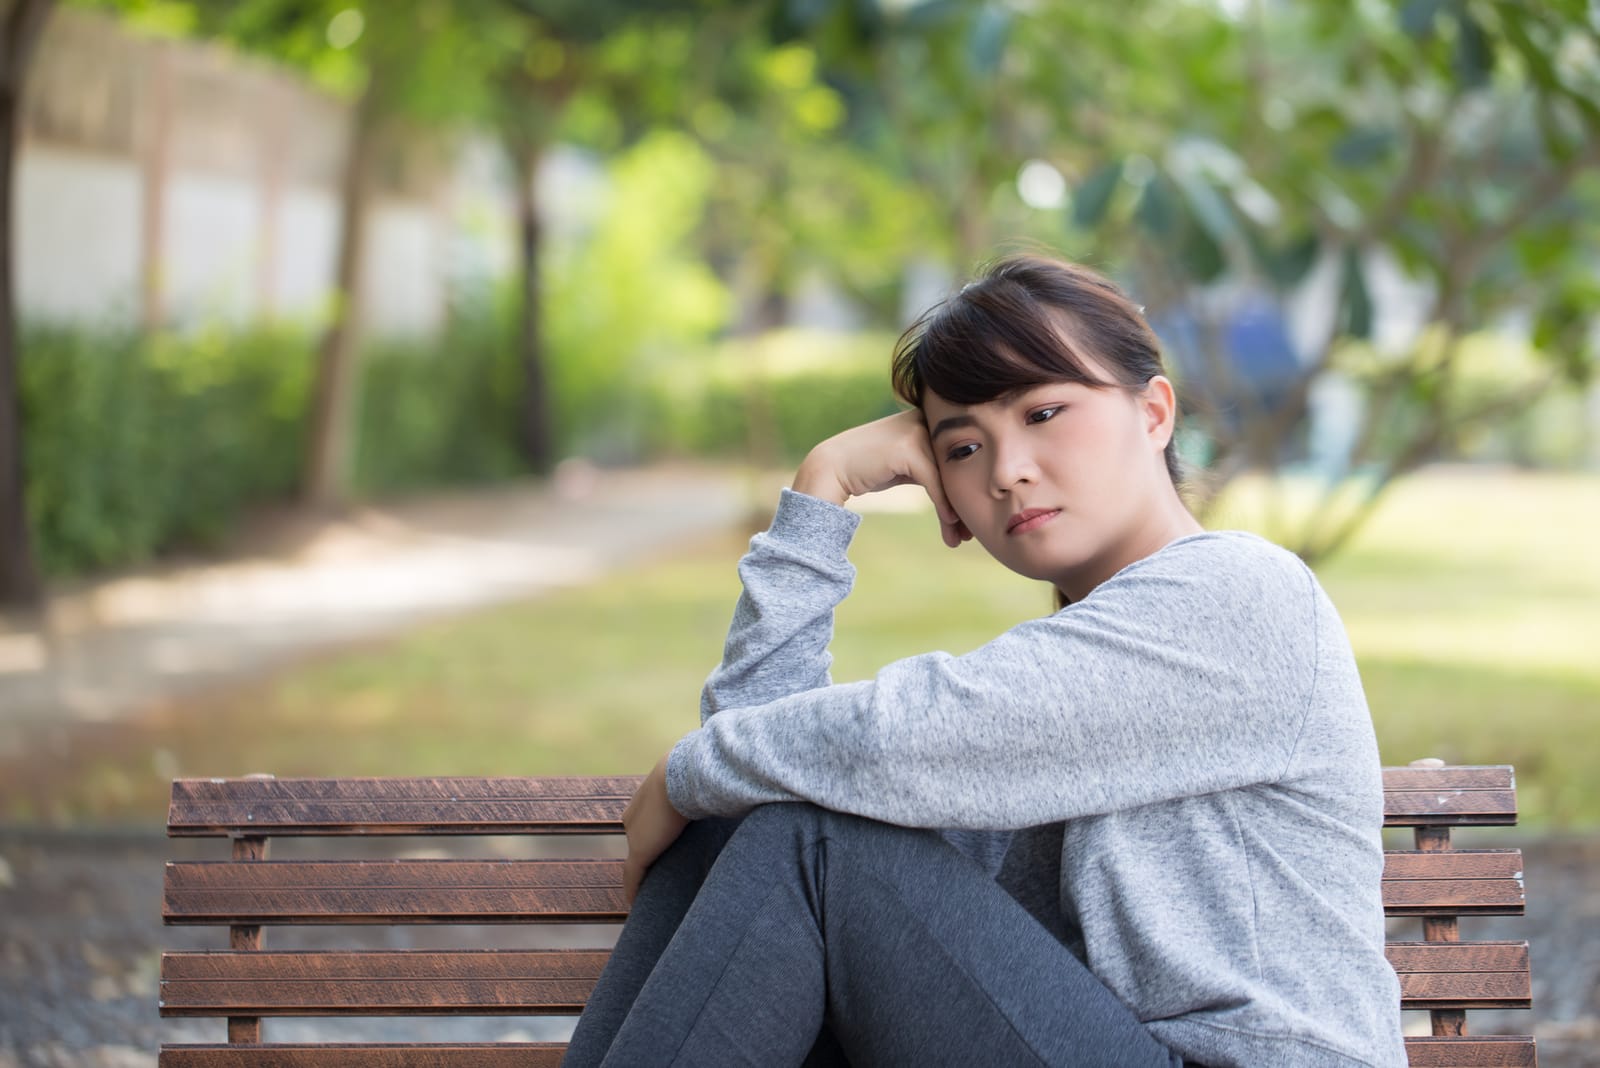 donna triste seduta su una panchina nel parco